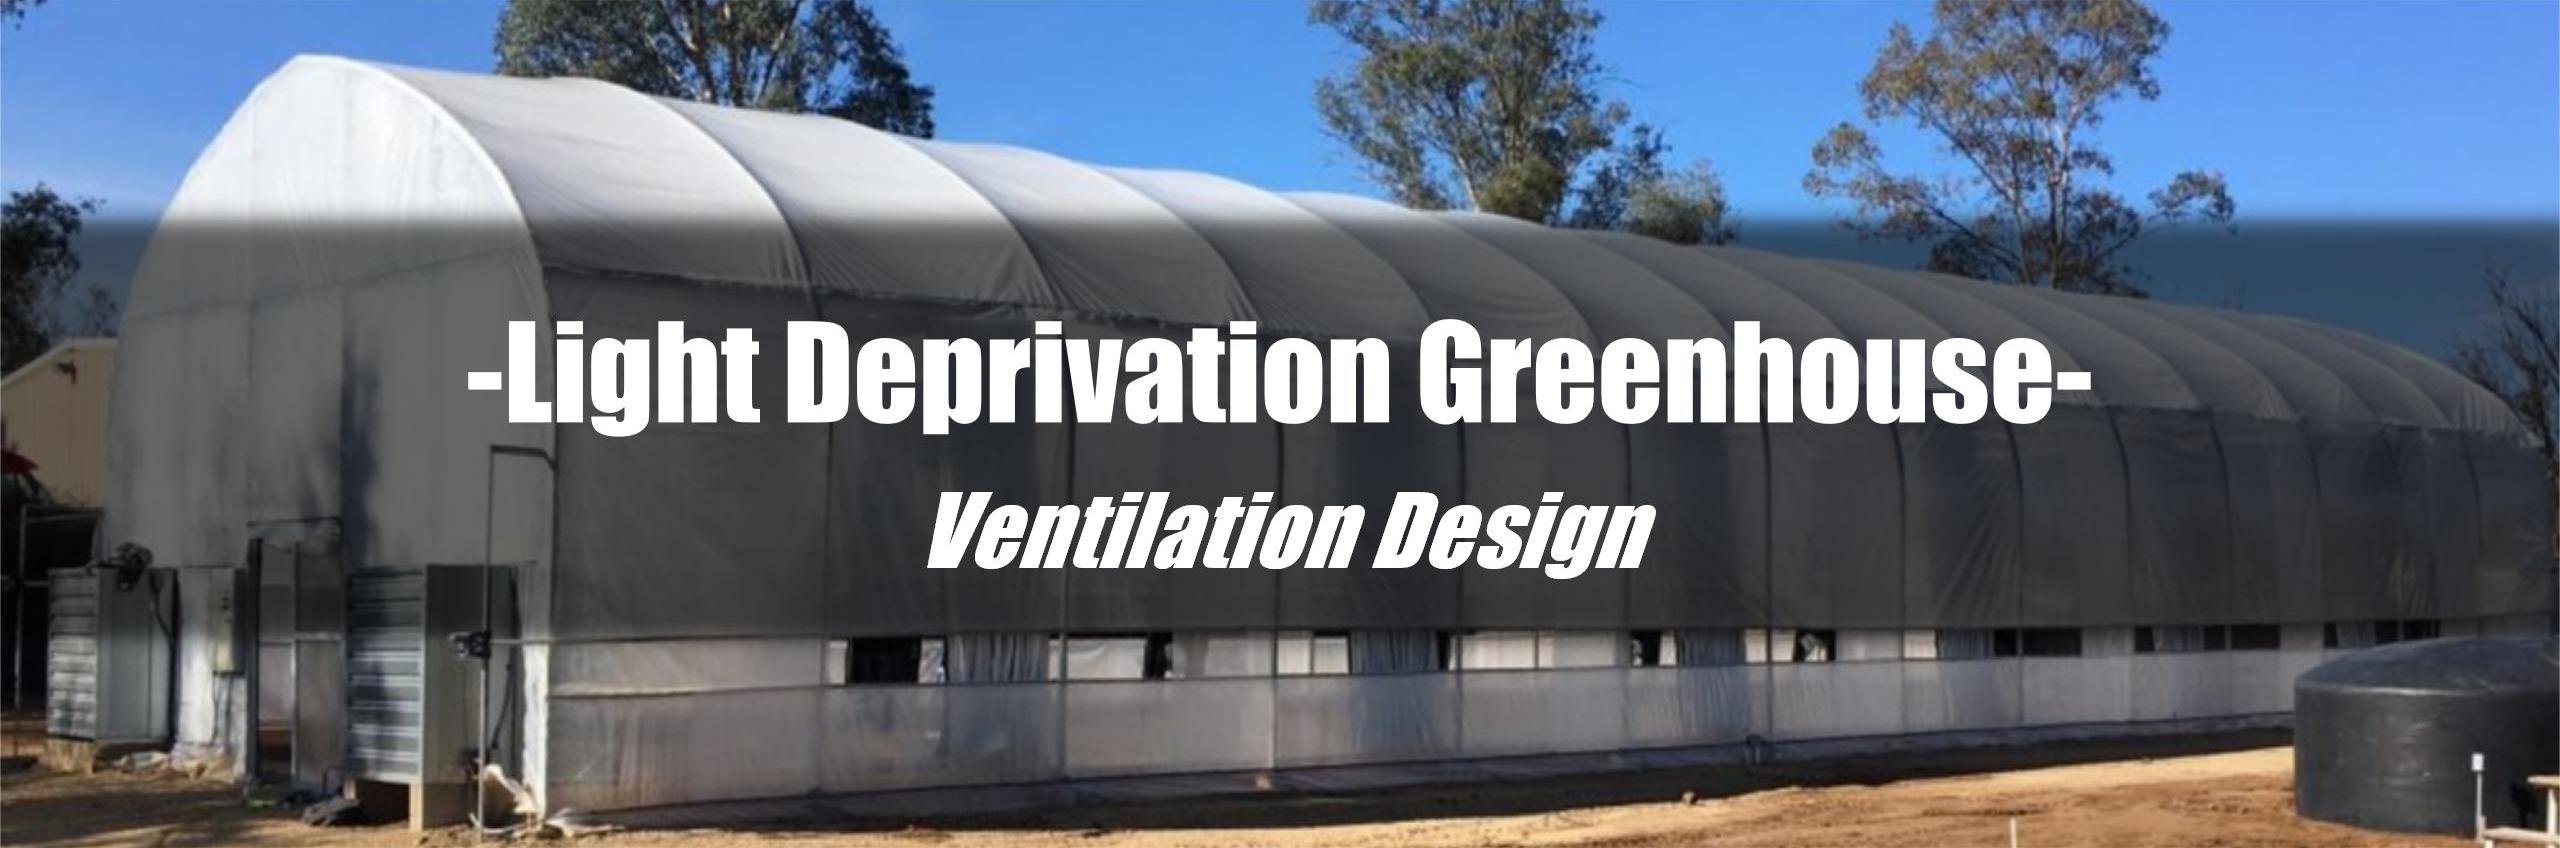 Un deseño de abertura de ventilación para invernadoiros de privación de luz